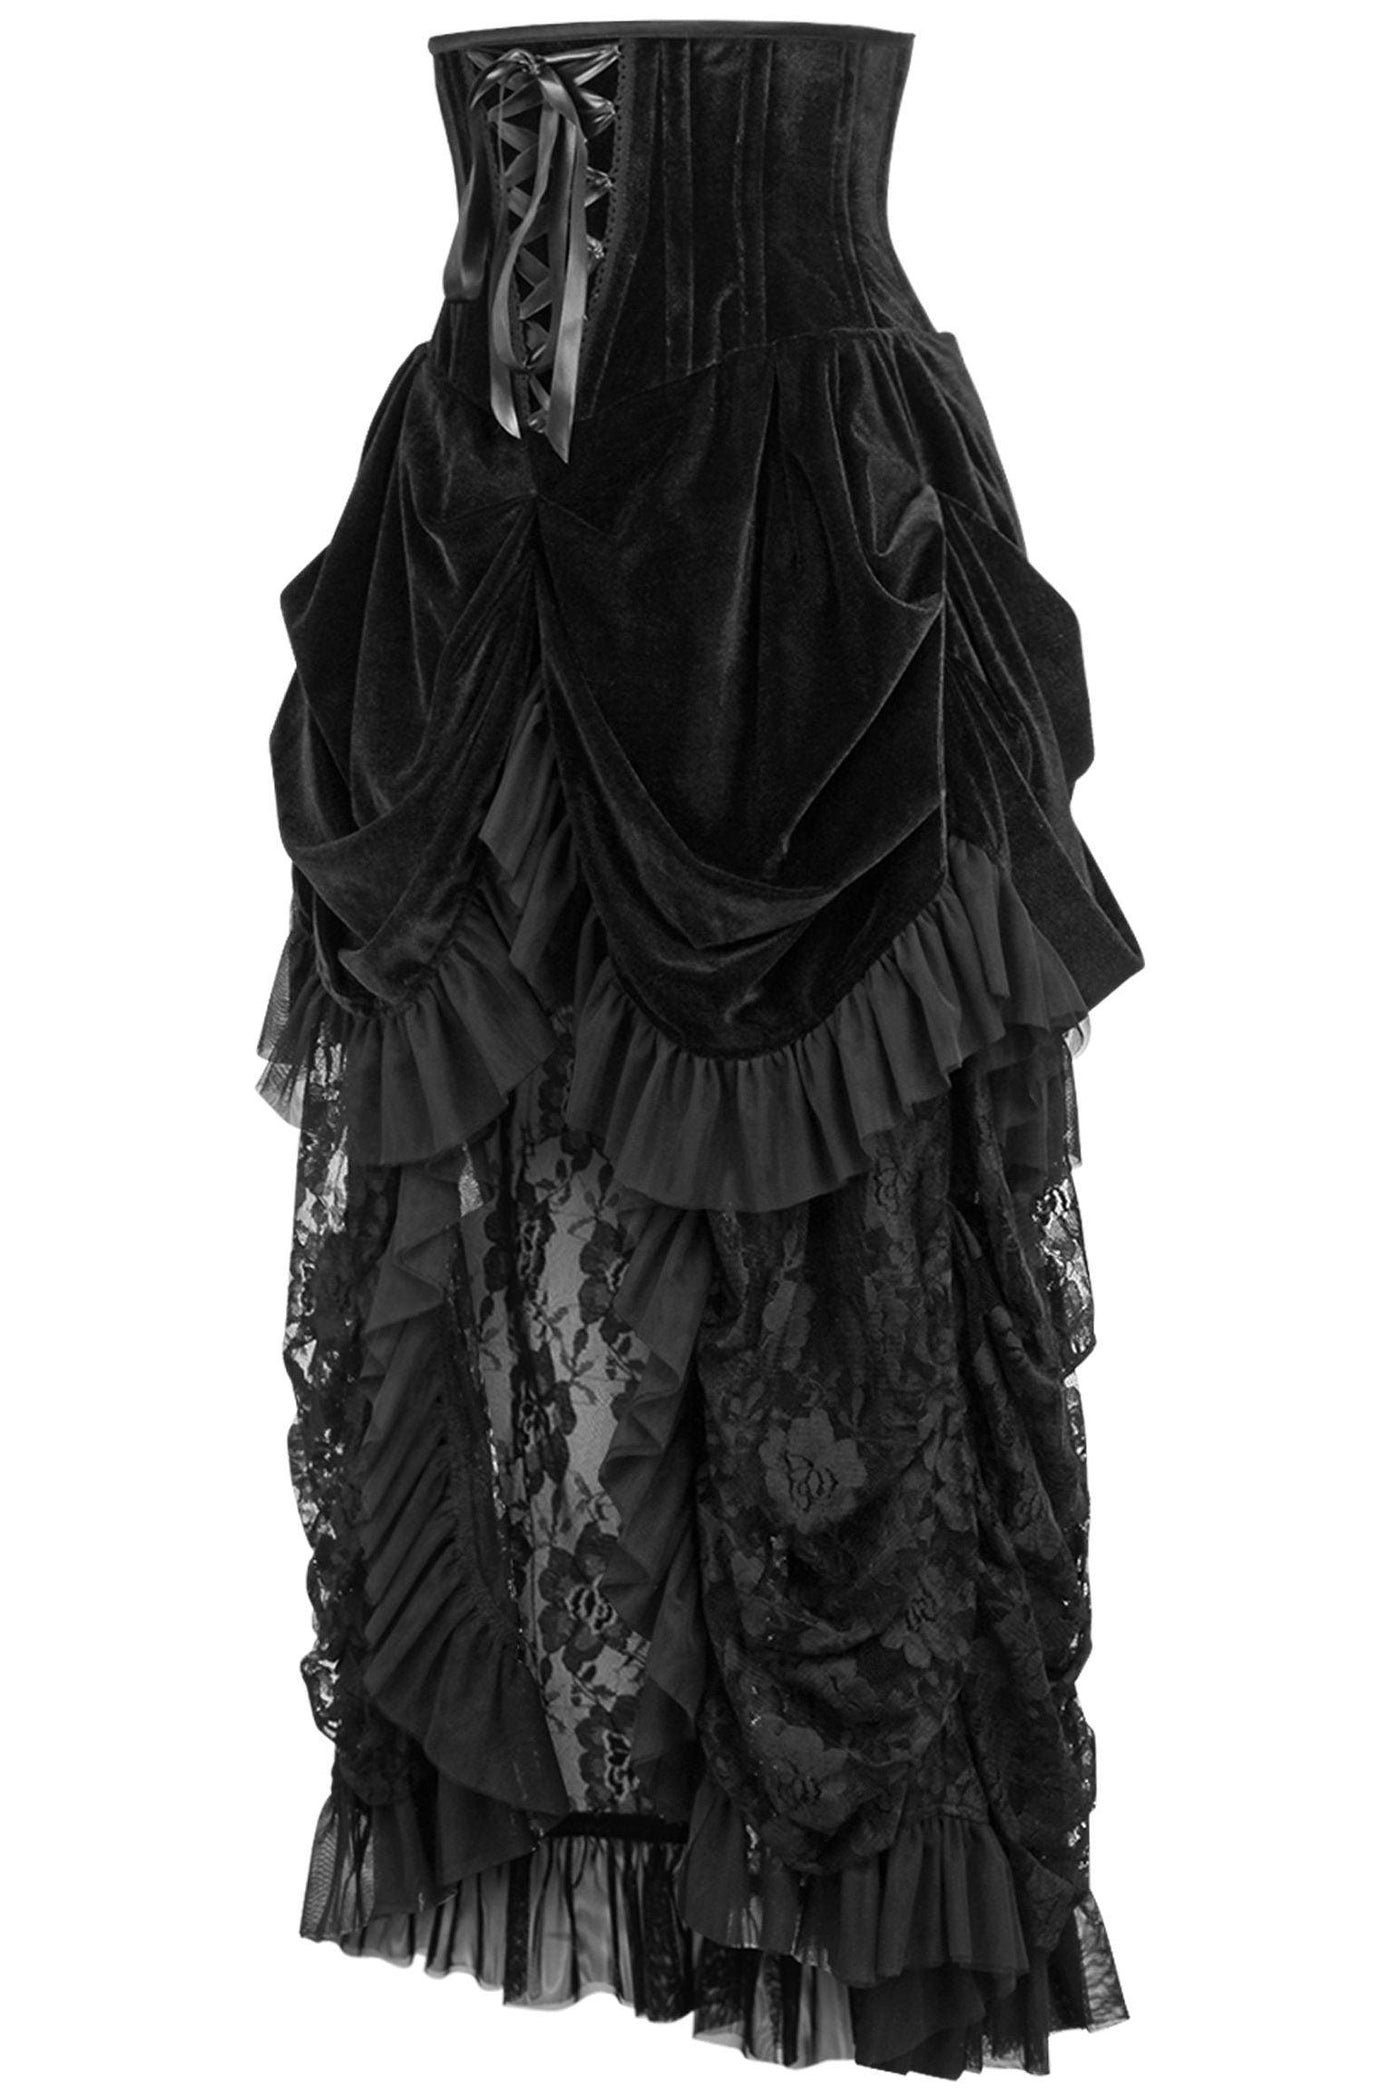 Top Drawer Steel Boned Black Velvet Victorian Bustle Underbust Corset Dress - AMIClubwear